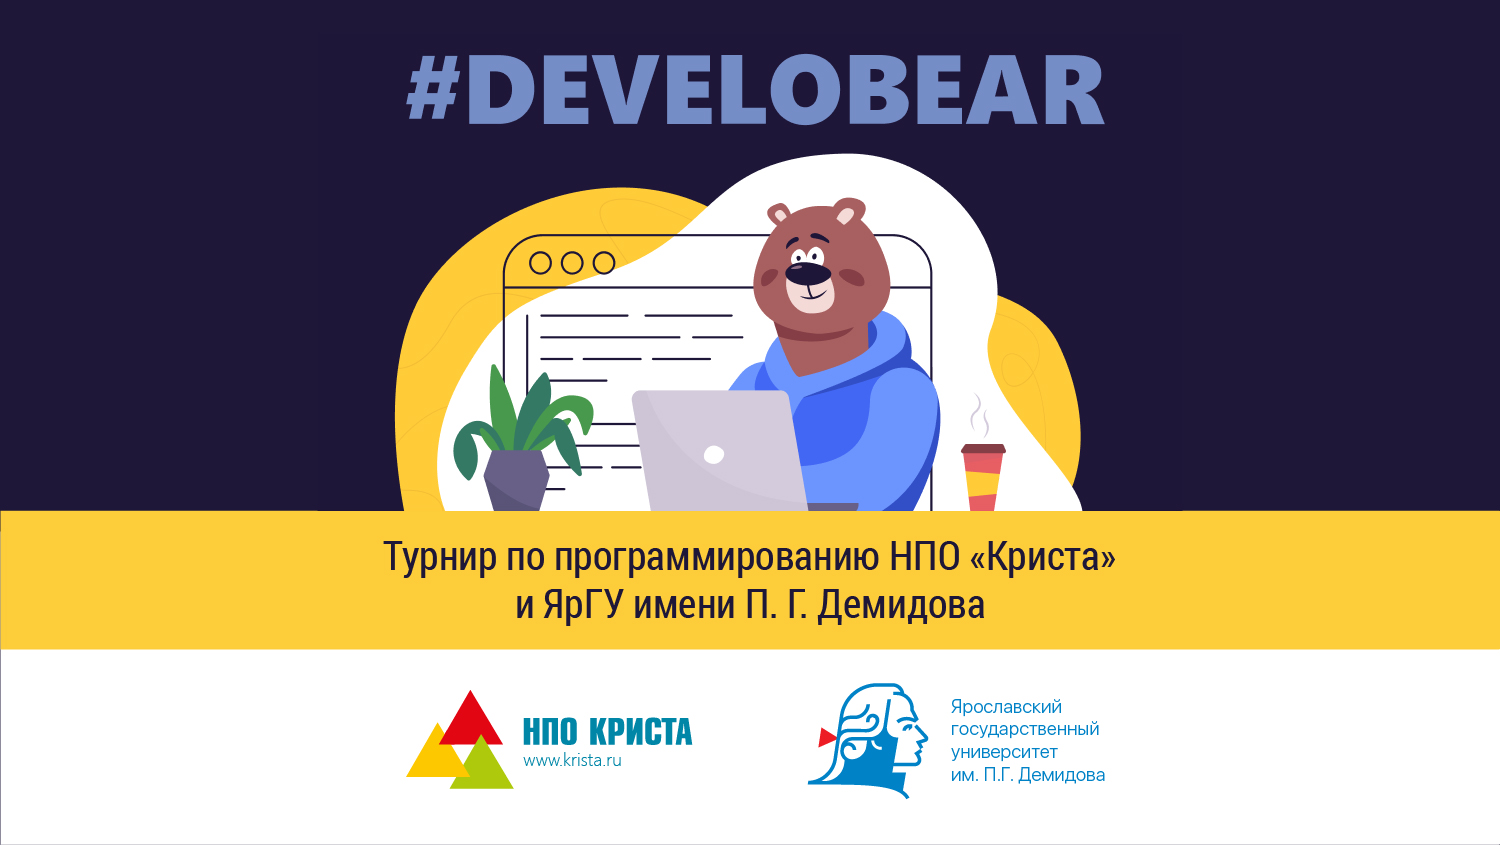 НПО Криста #Develobear. 17 report krista ru